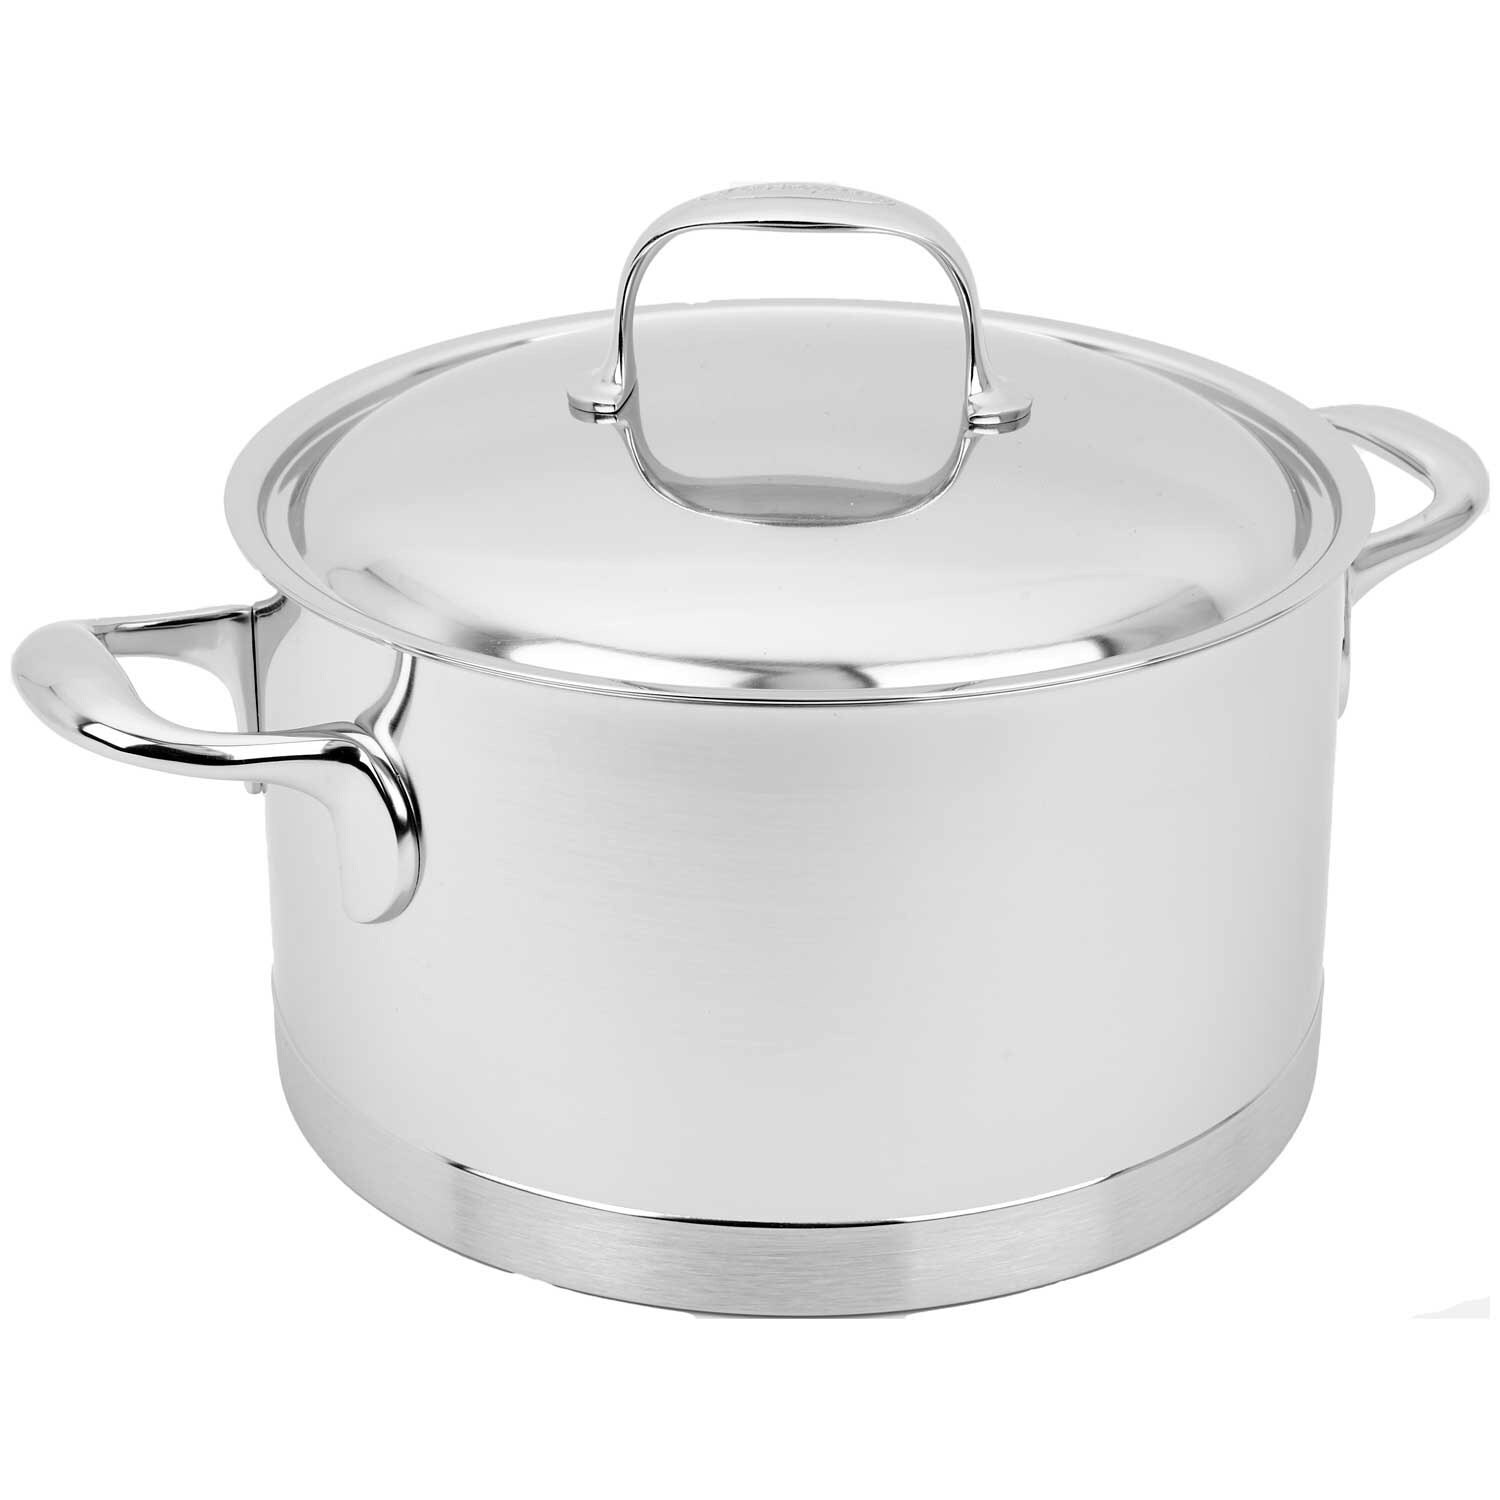 https://royaldesign.com/image/2/demeyere-atlantis-pot-with-steel-lid-24cm-1